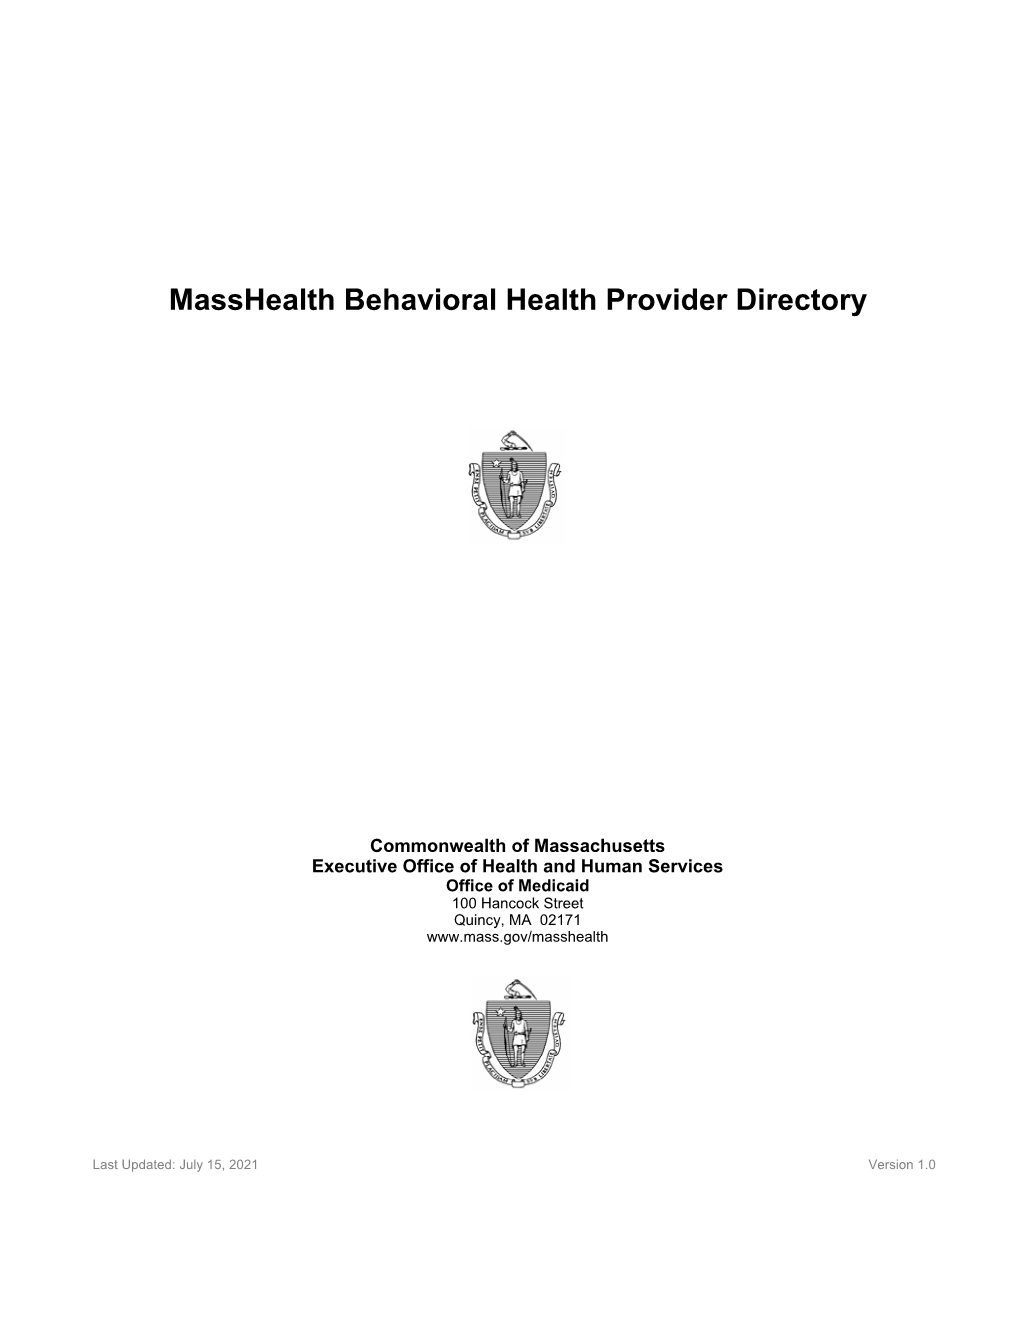 Masshealth Behavioral Health Provider Directory